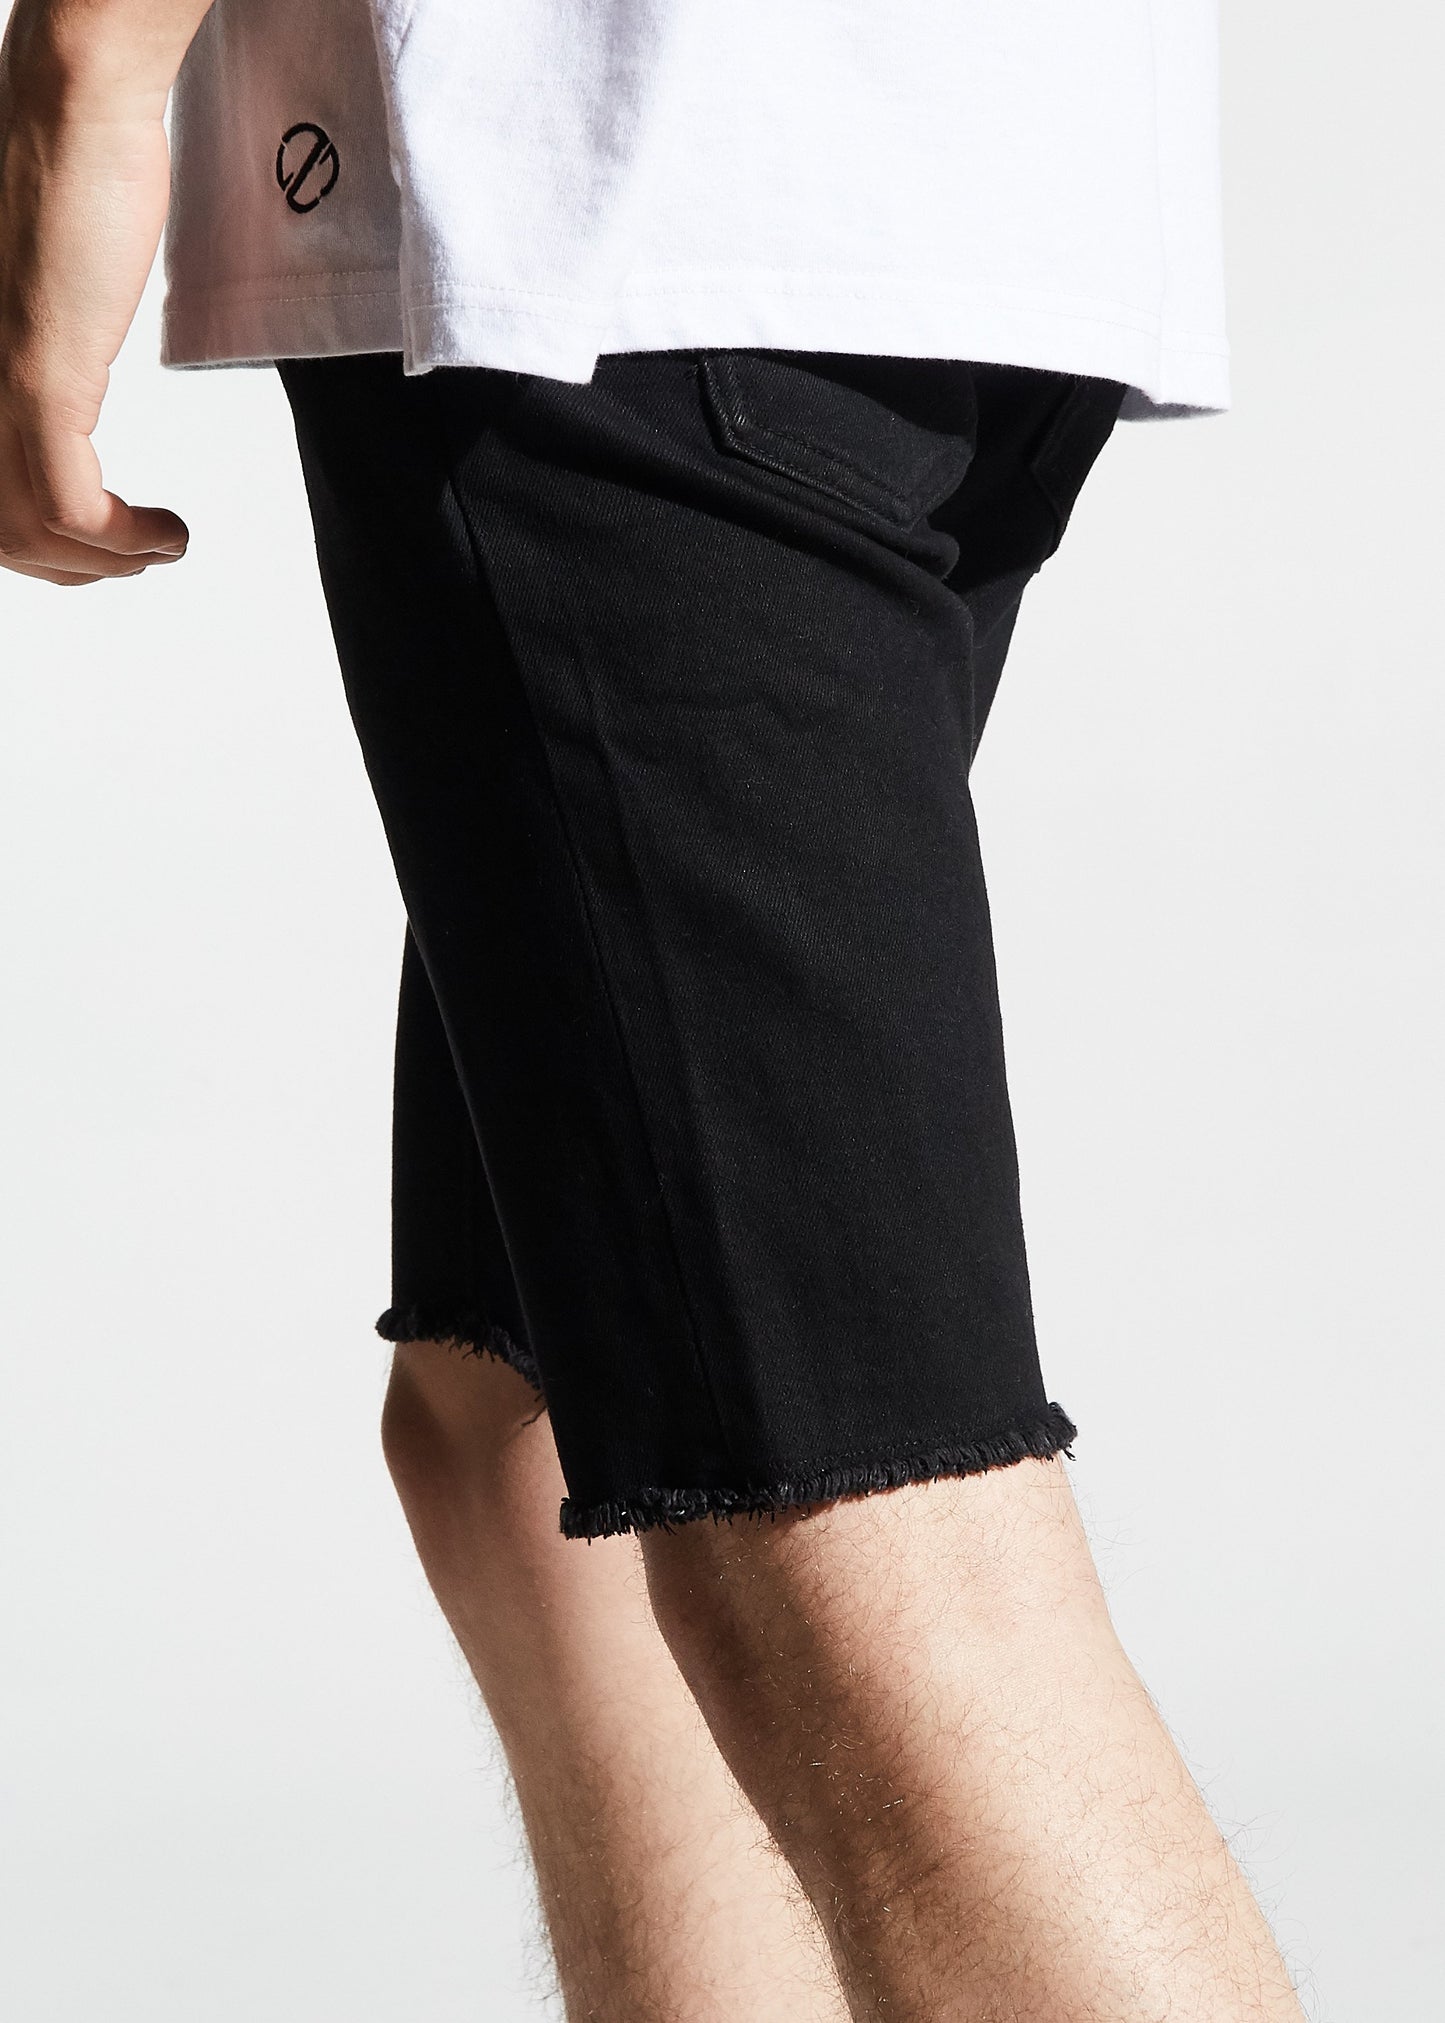 Pacific Shorts (Black)